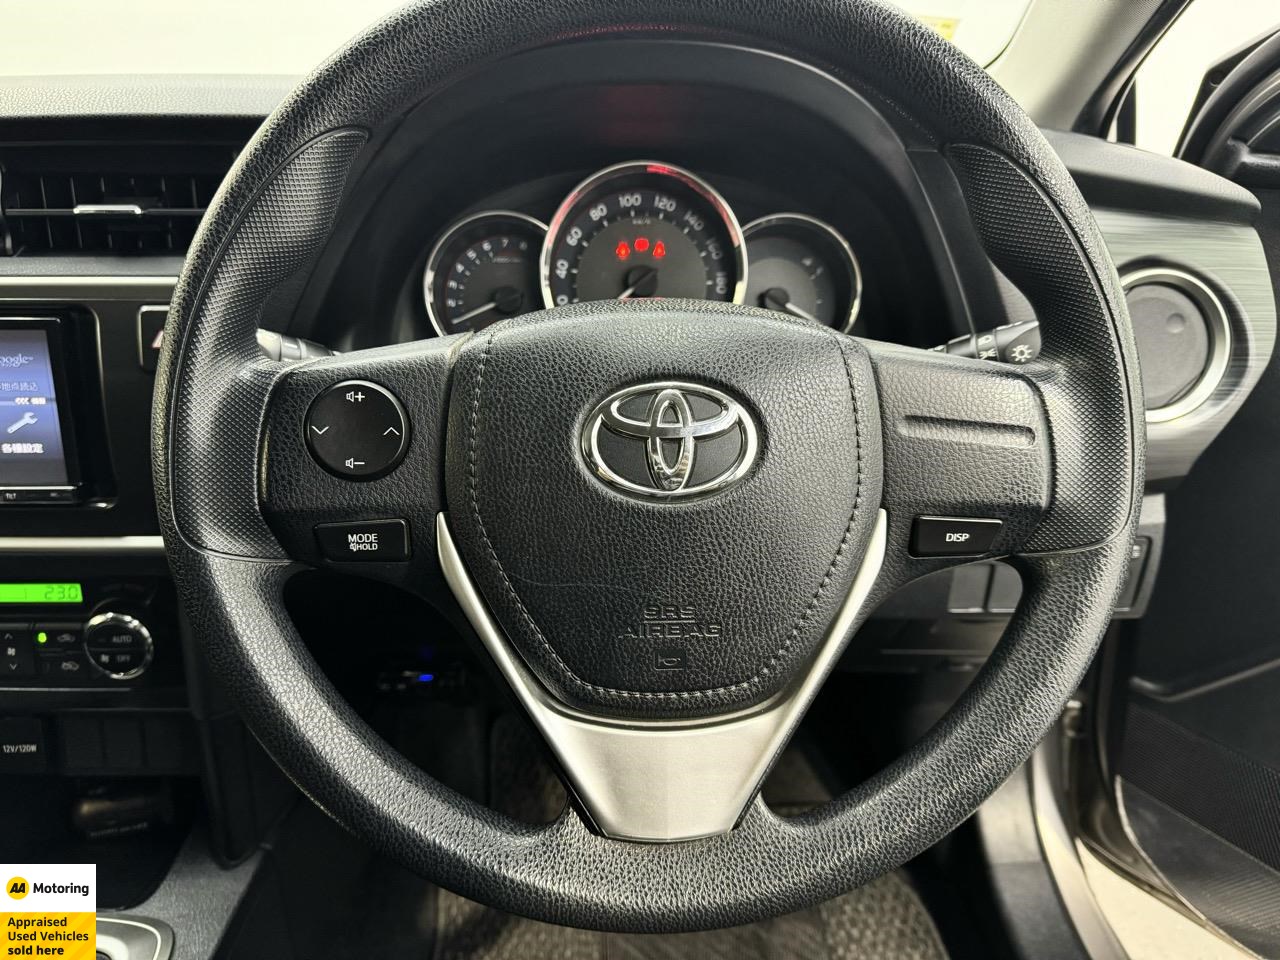 2013 Toyota Auris